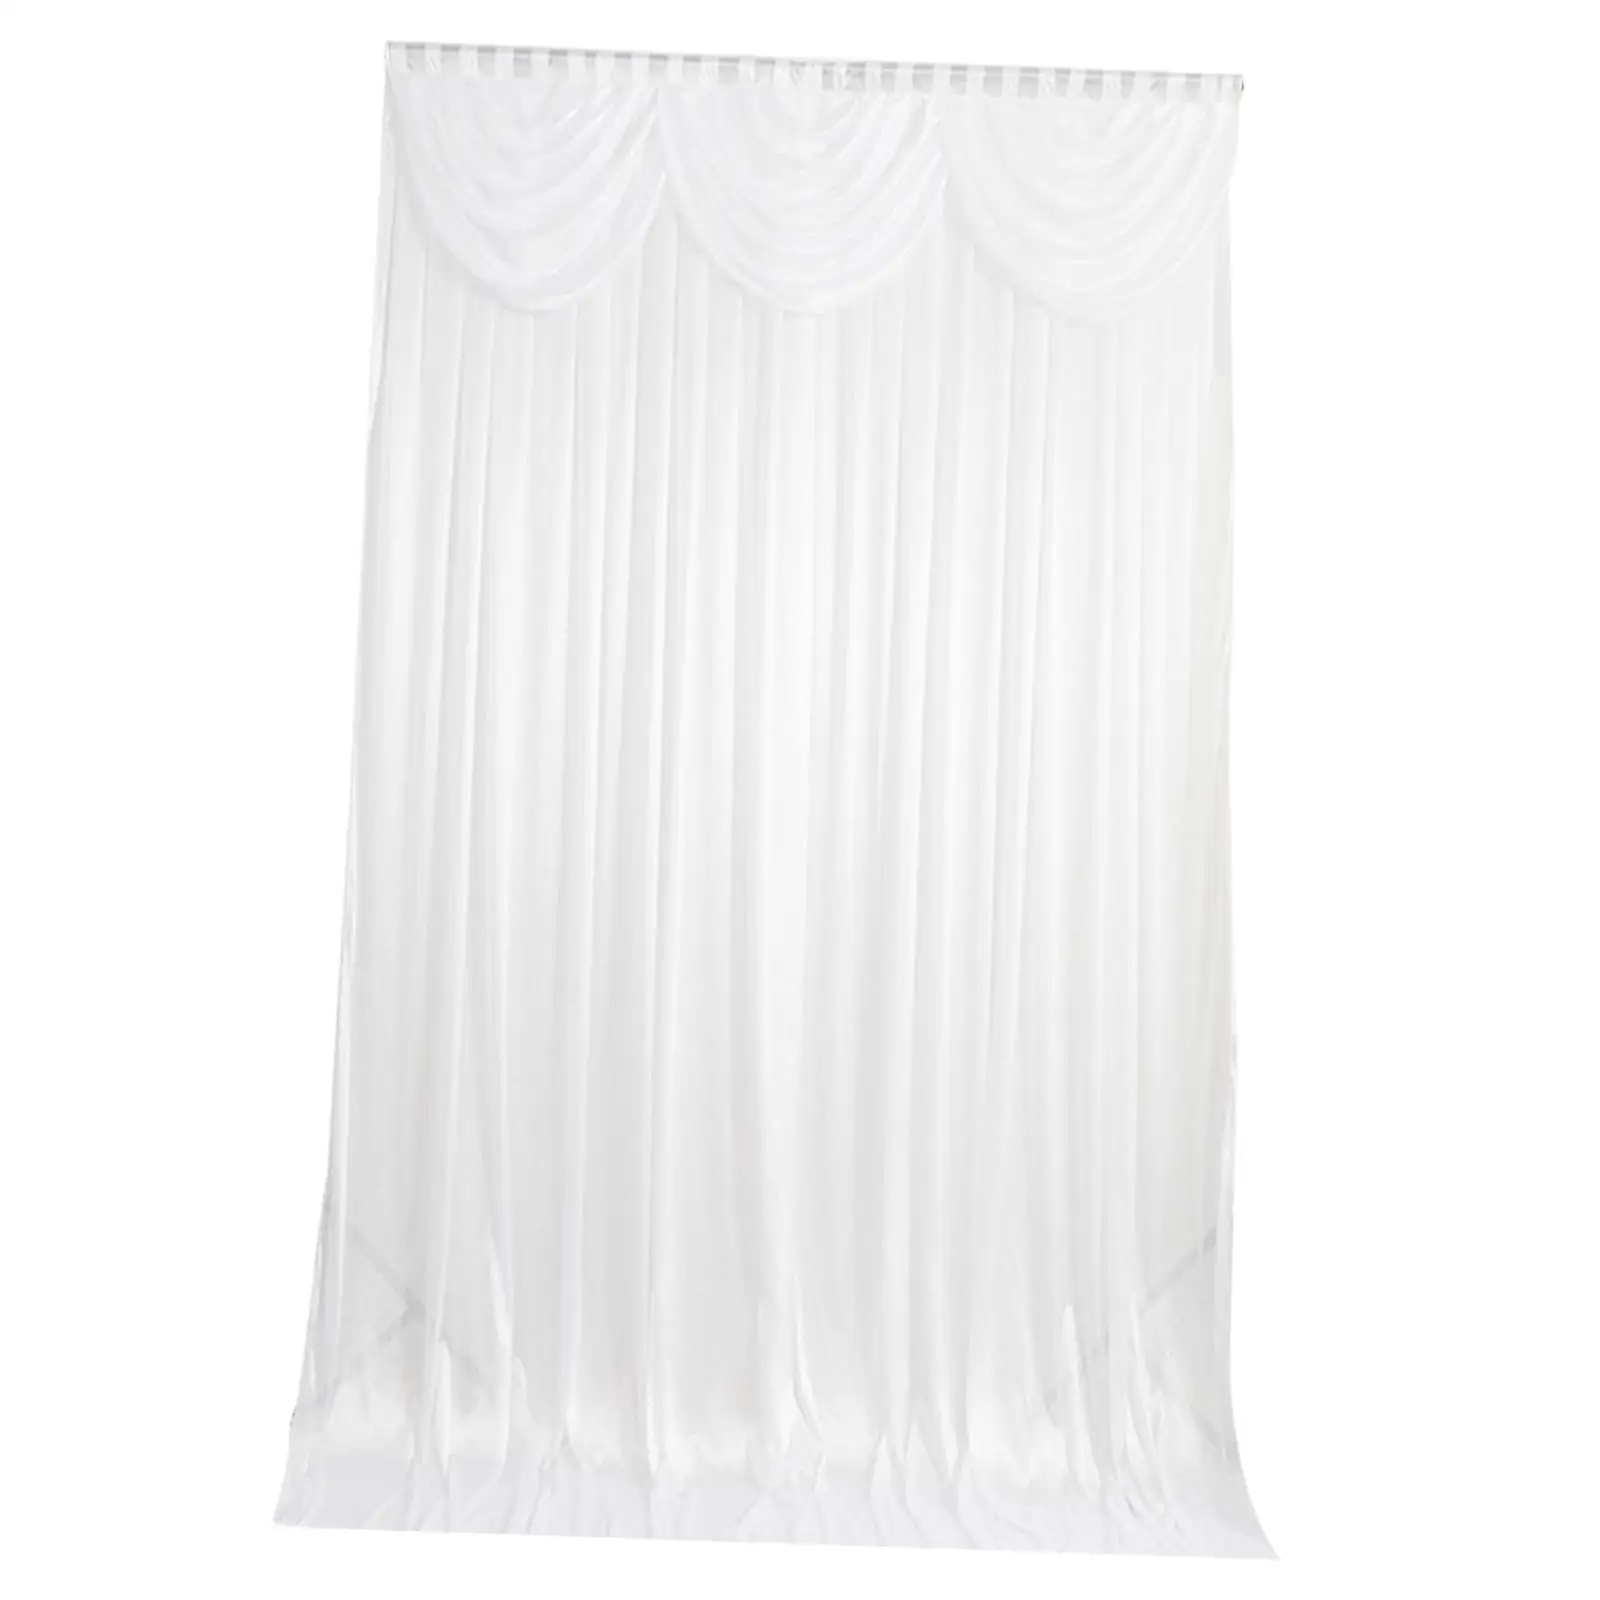 White Backdrop Curtain Photo Studio Props Background Screen for Home Decor